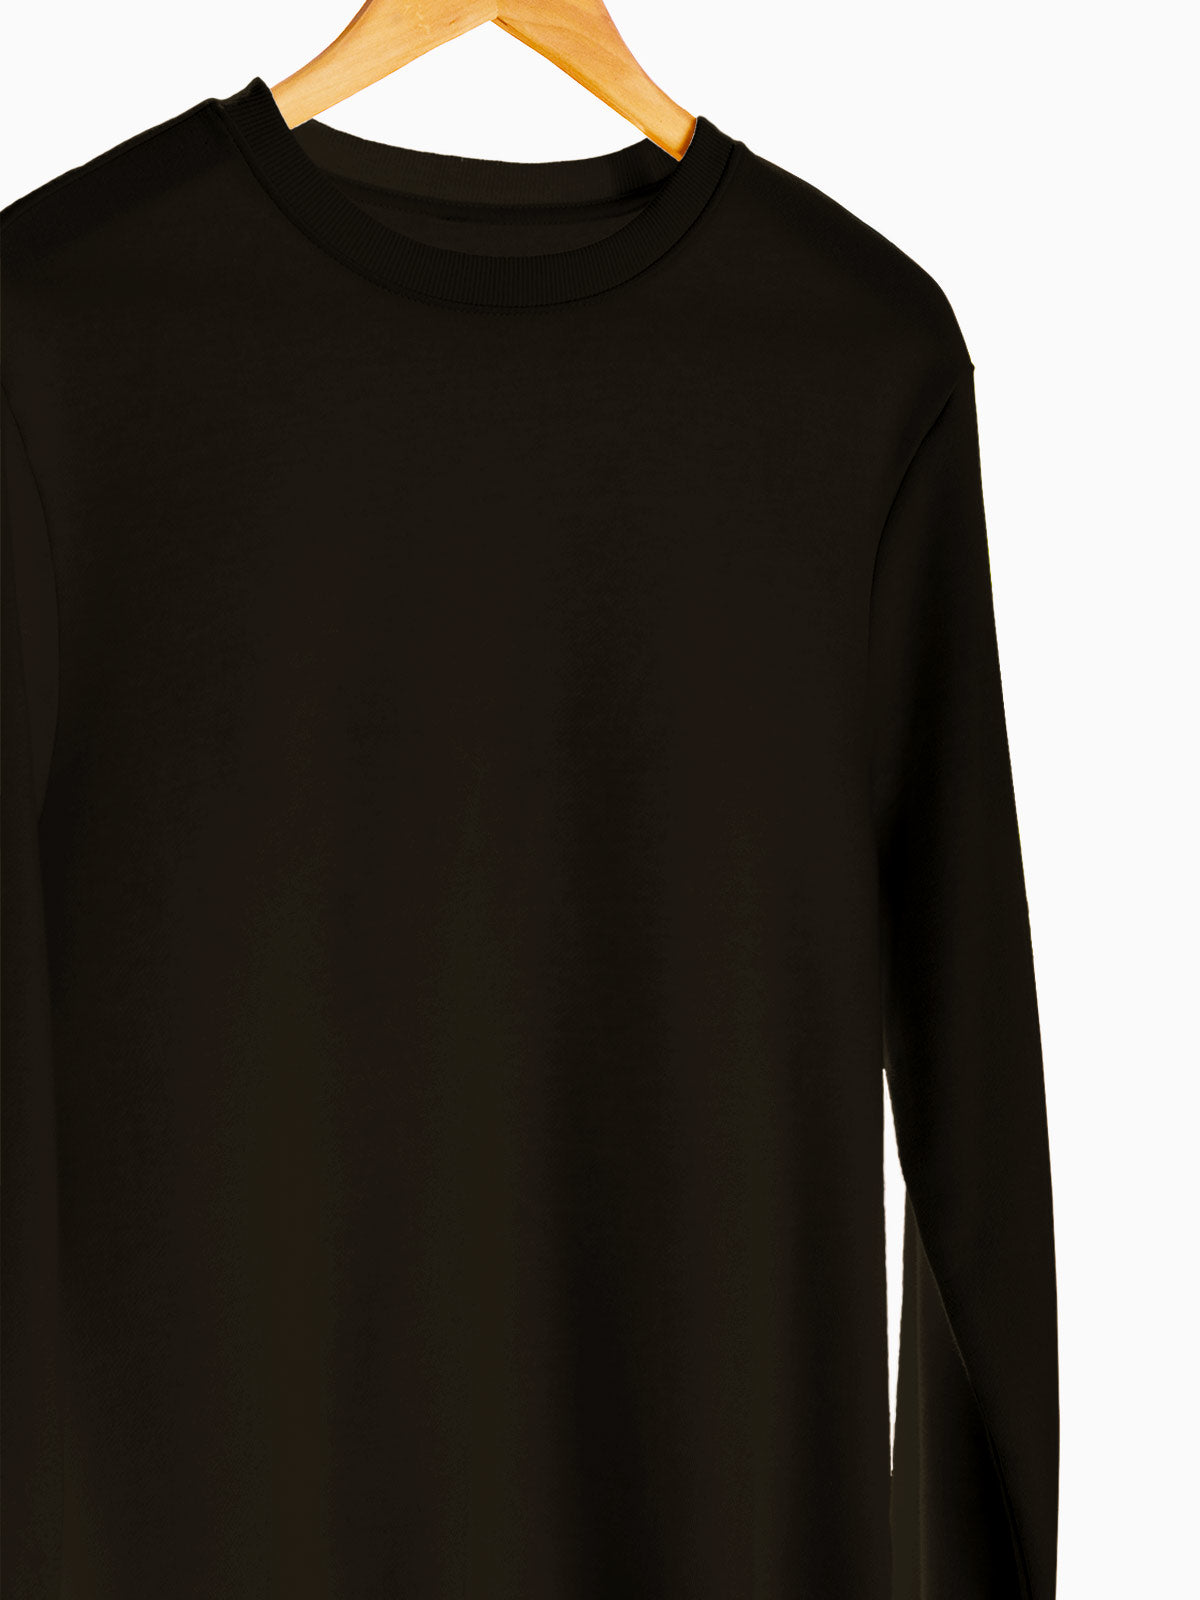 Coffee Brown & Light Grey Unisex Plain Sweatshirt Combo